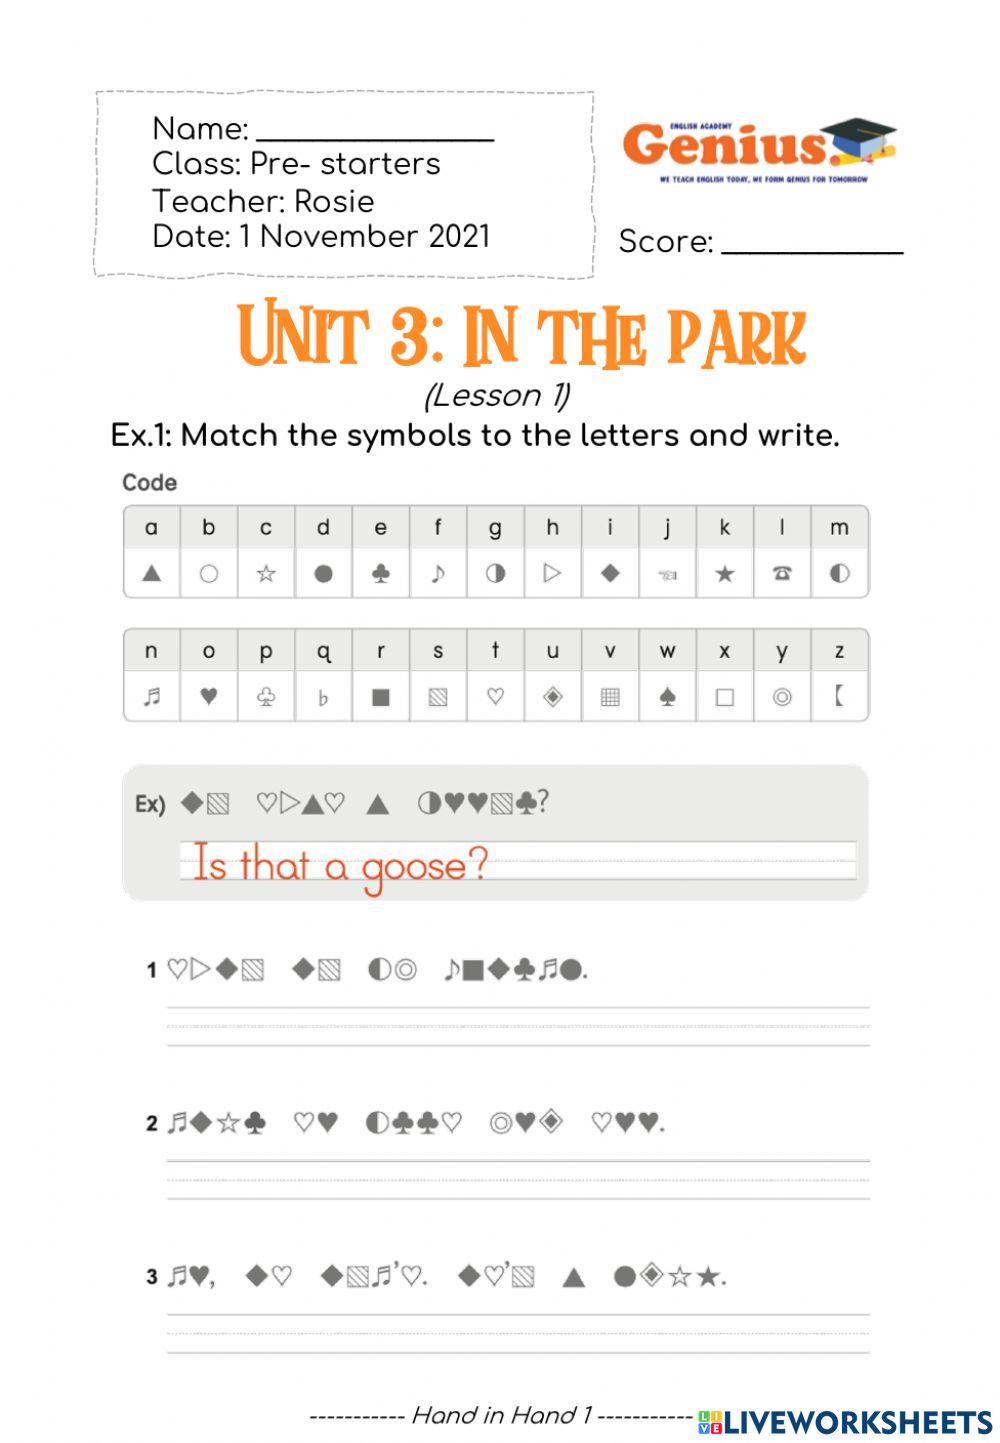 Unit 4: In the park (Lesson 1)